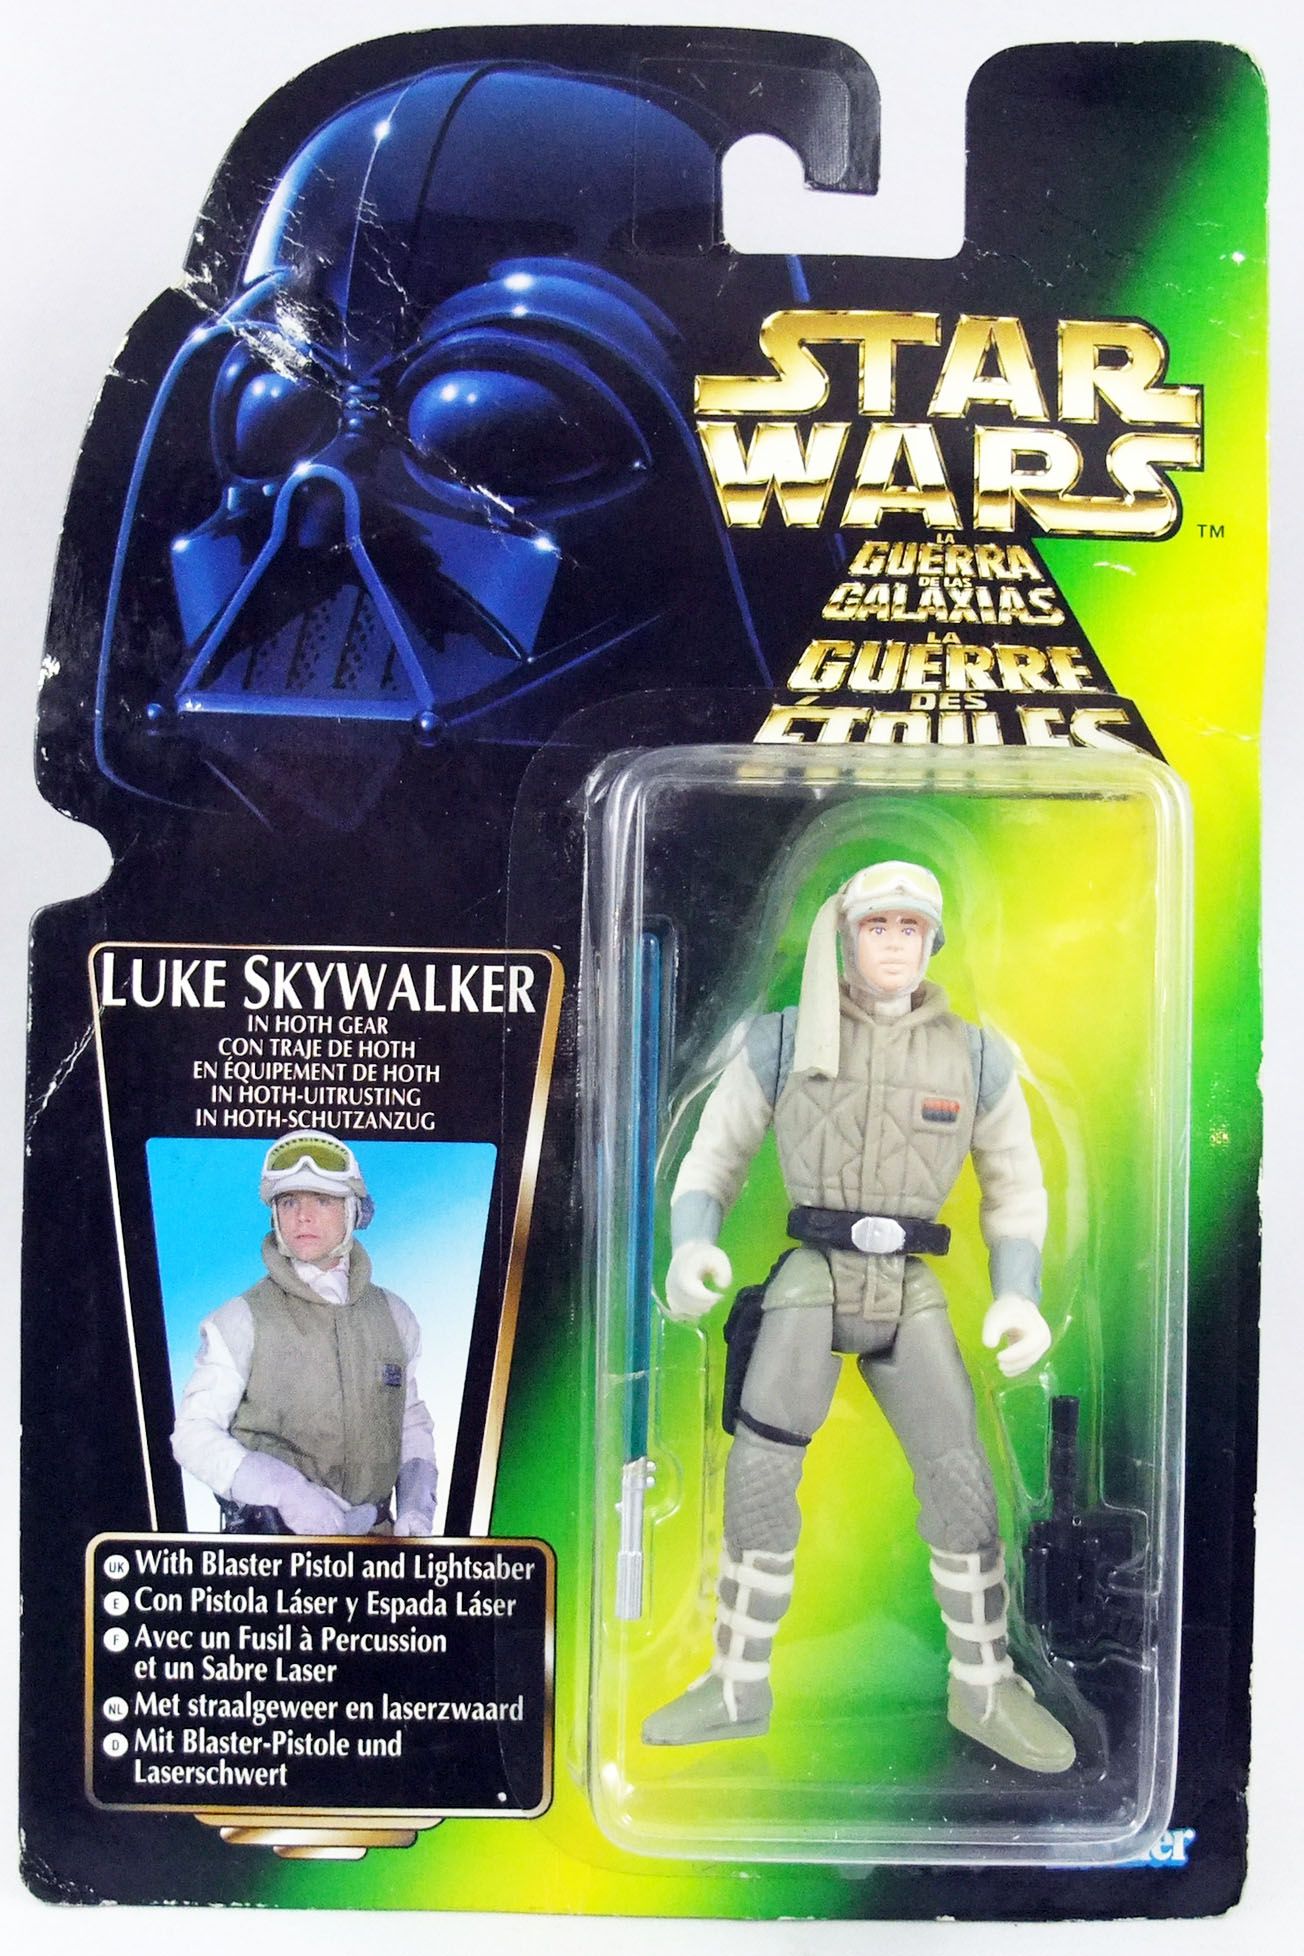 Star Wars (The Power of the Force) - Kenner - Luke Skywalker in